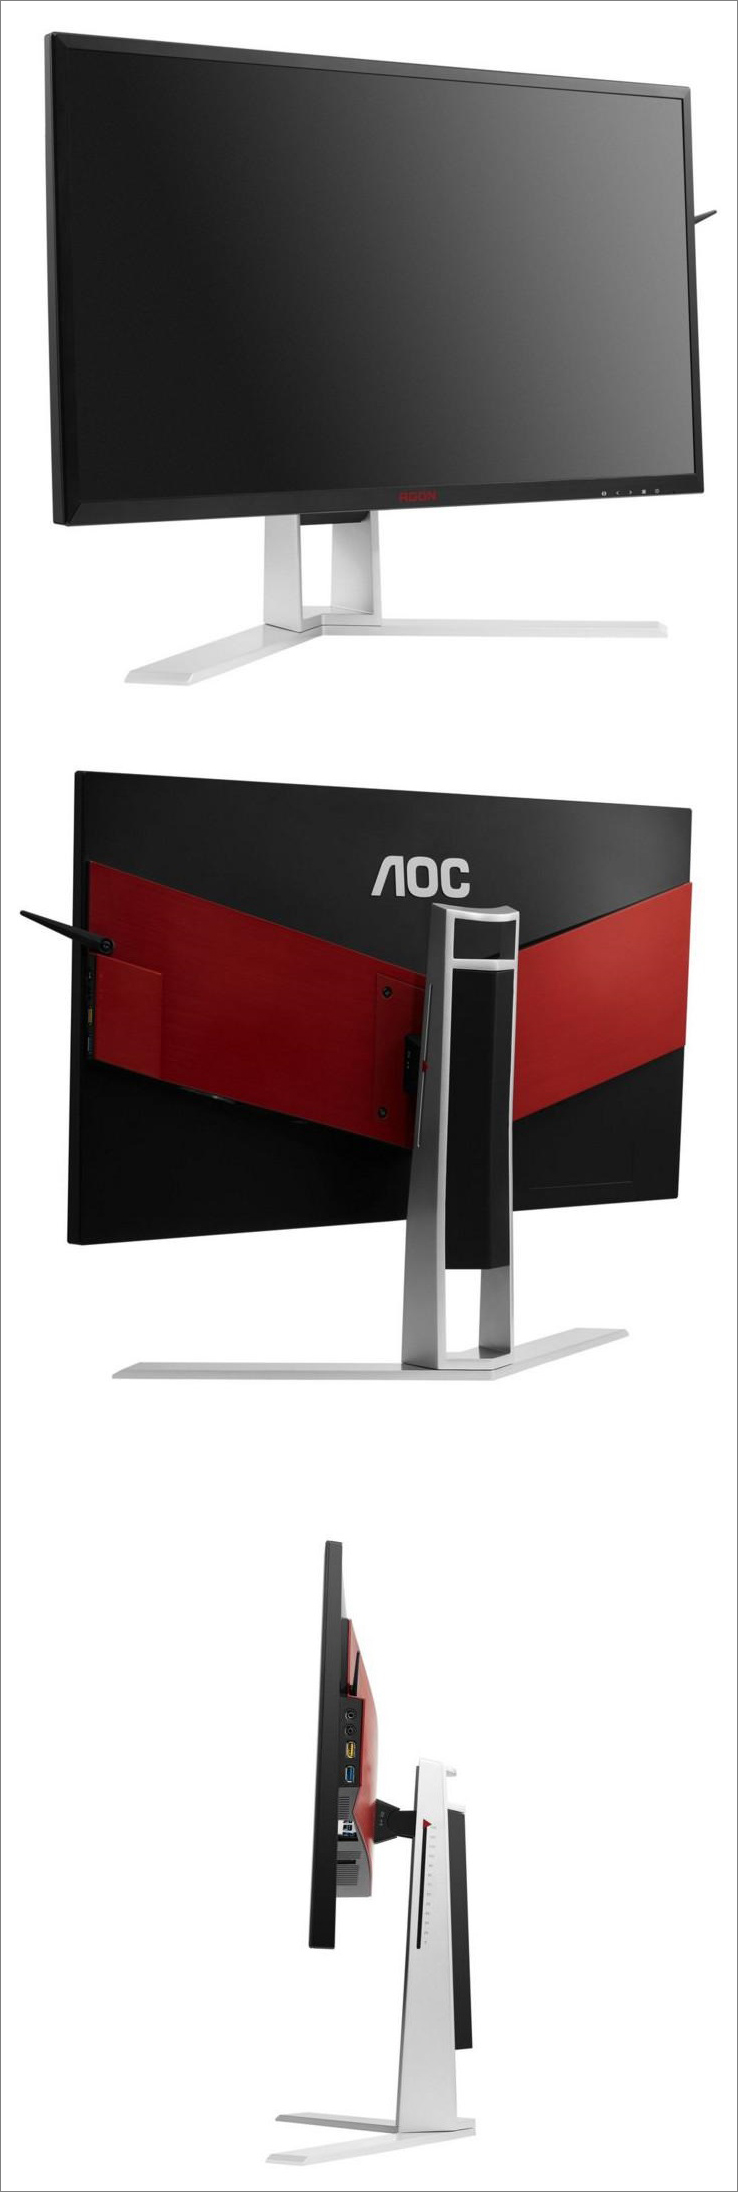 AOC Agon AG271QX je QHD herní monitor se 144Hz obnovovací frekvencí